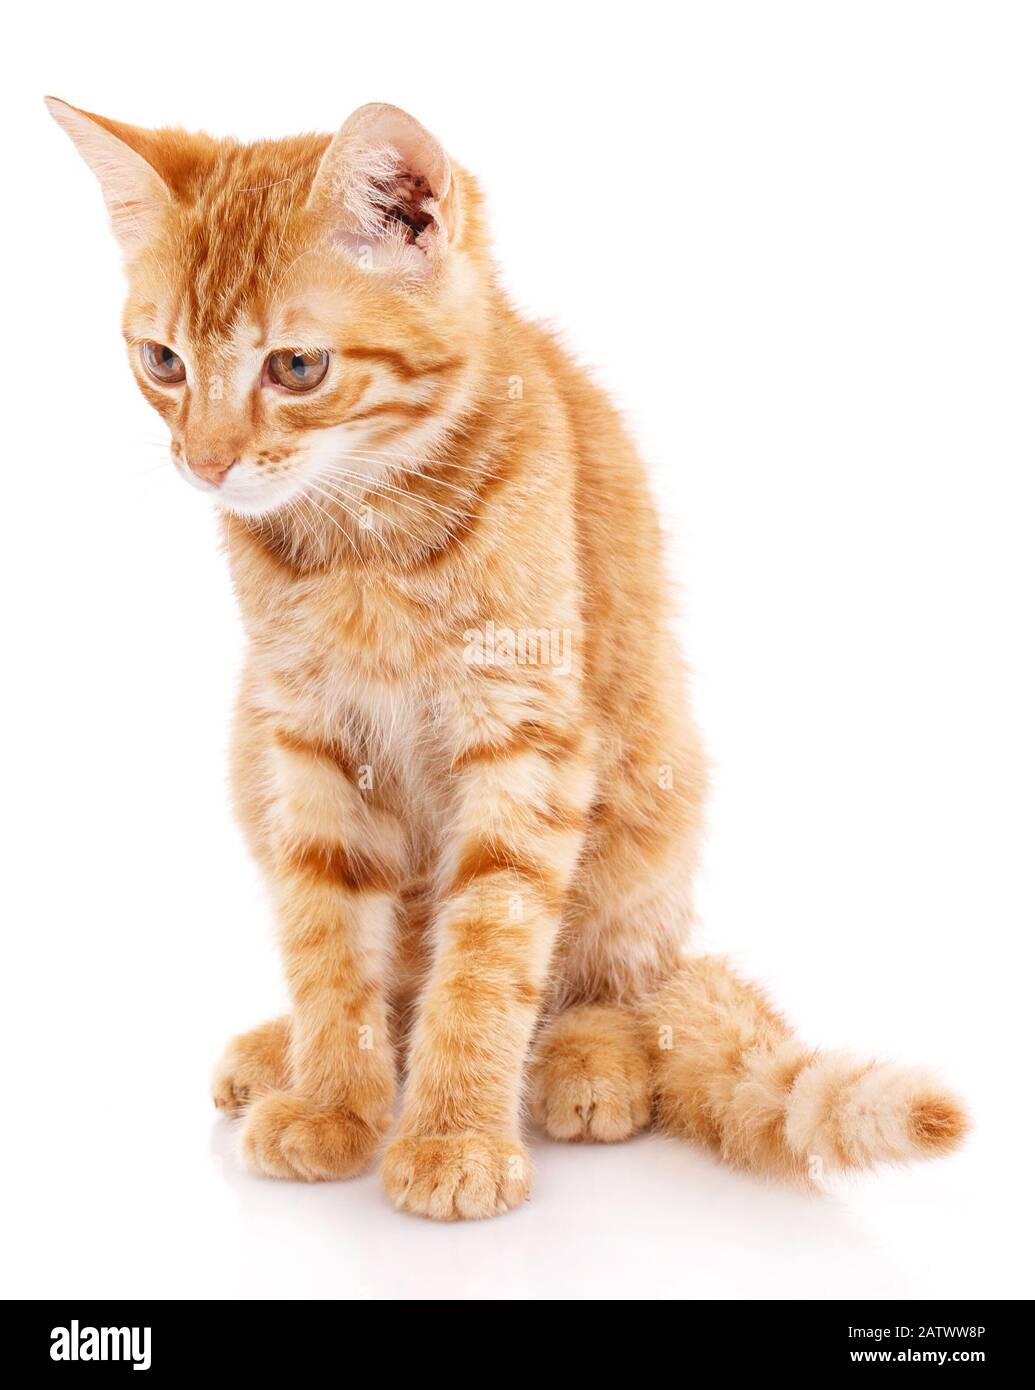 Red kitten. Sitting cat. Kitten on a white background. Stock Photo